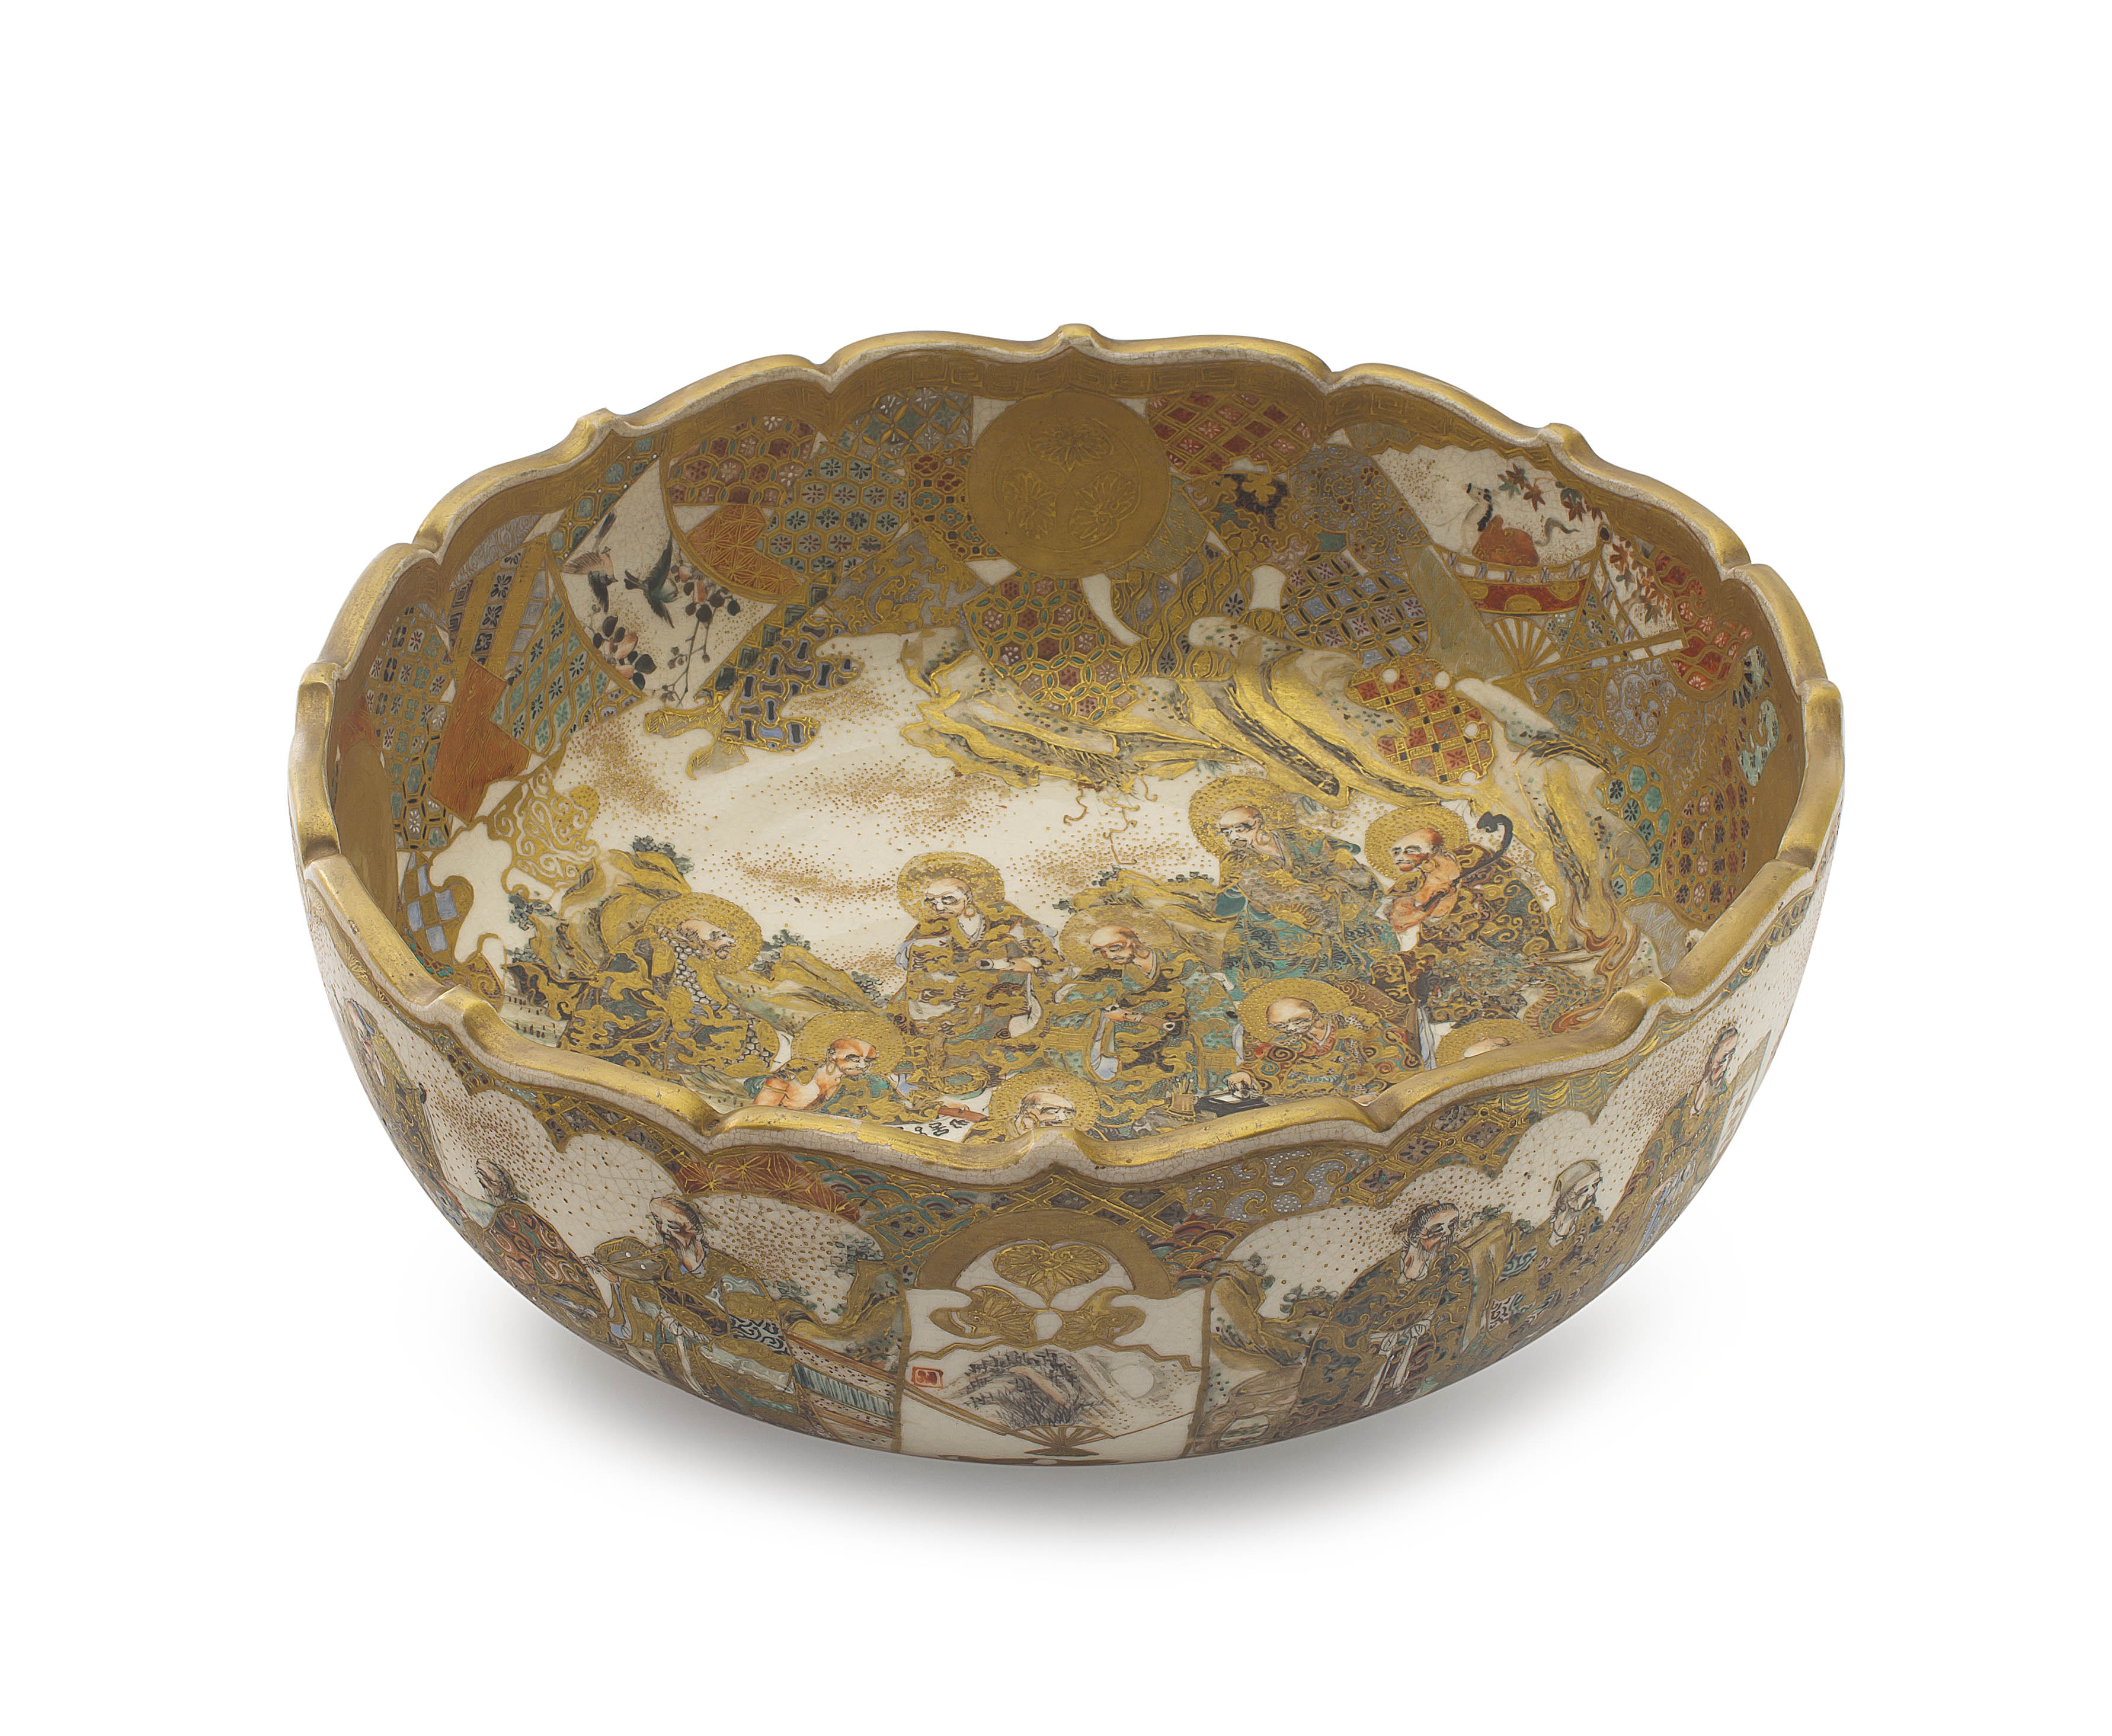 A large Japanese Satsuma bowl, Meiji period, 1868-1912